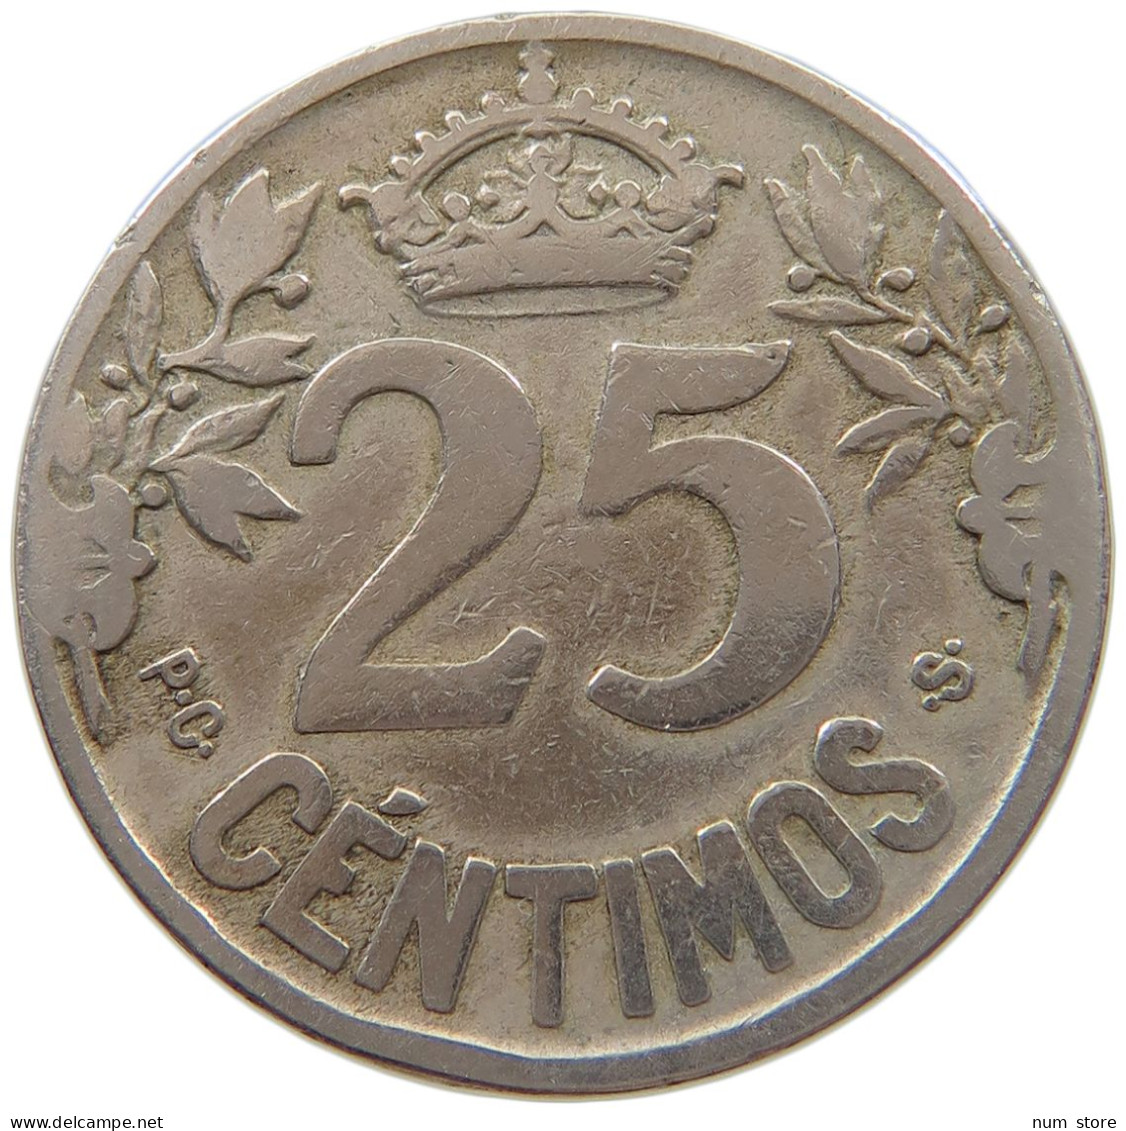 SPAIN 25 CENTIMOS 1925 #c071 0121 - 25 Centimos